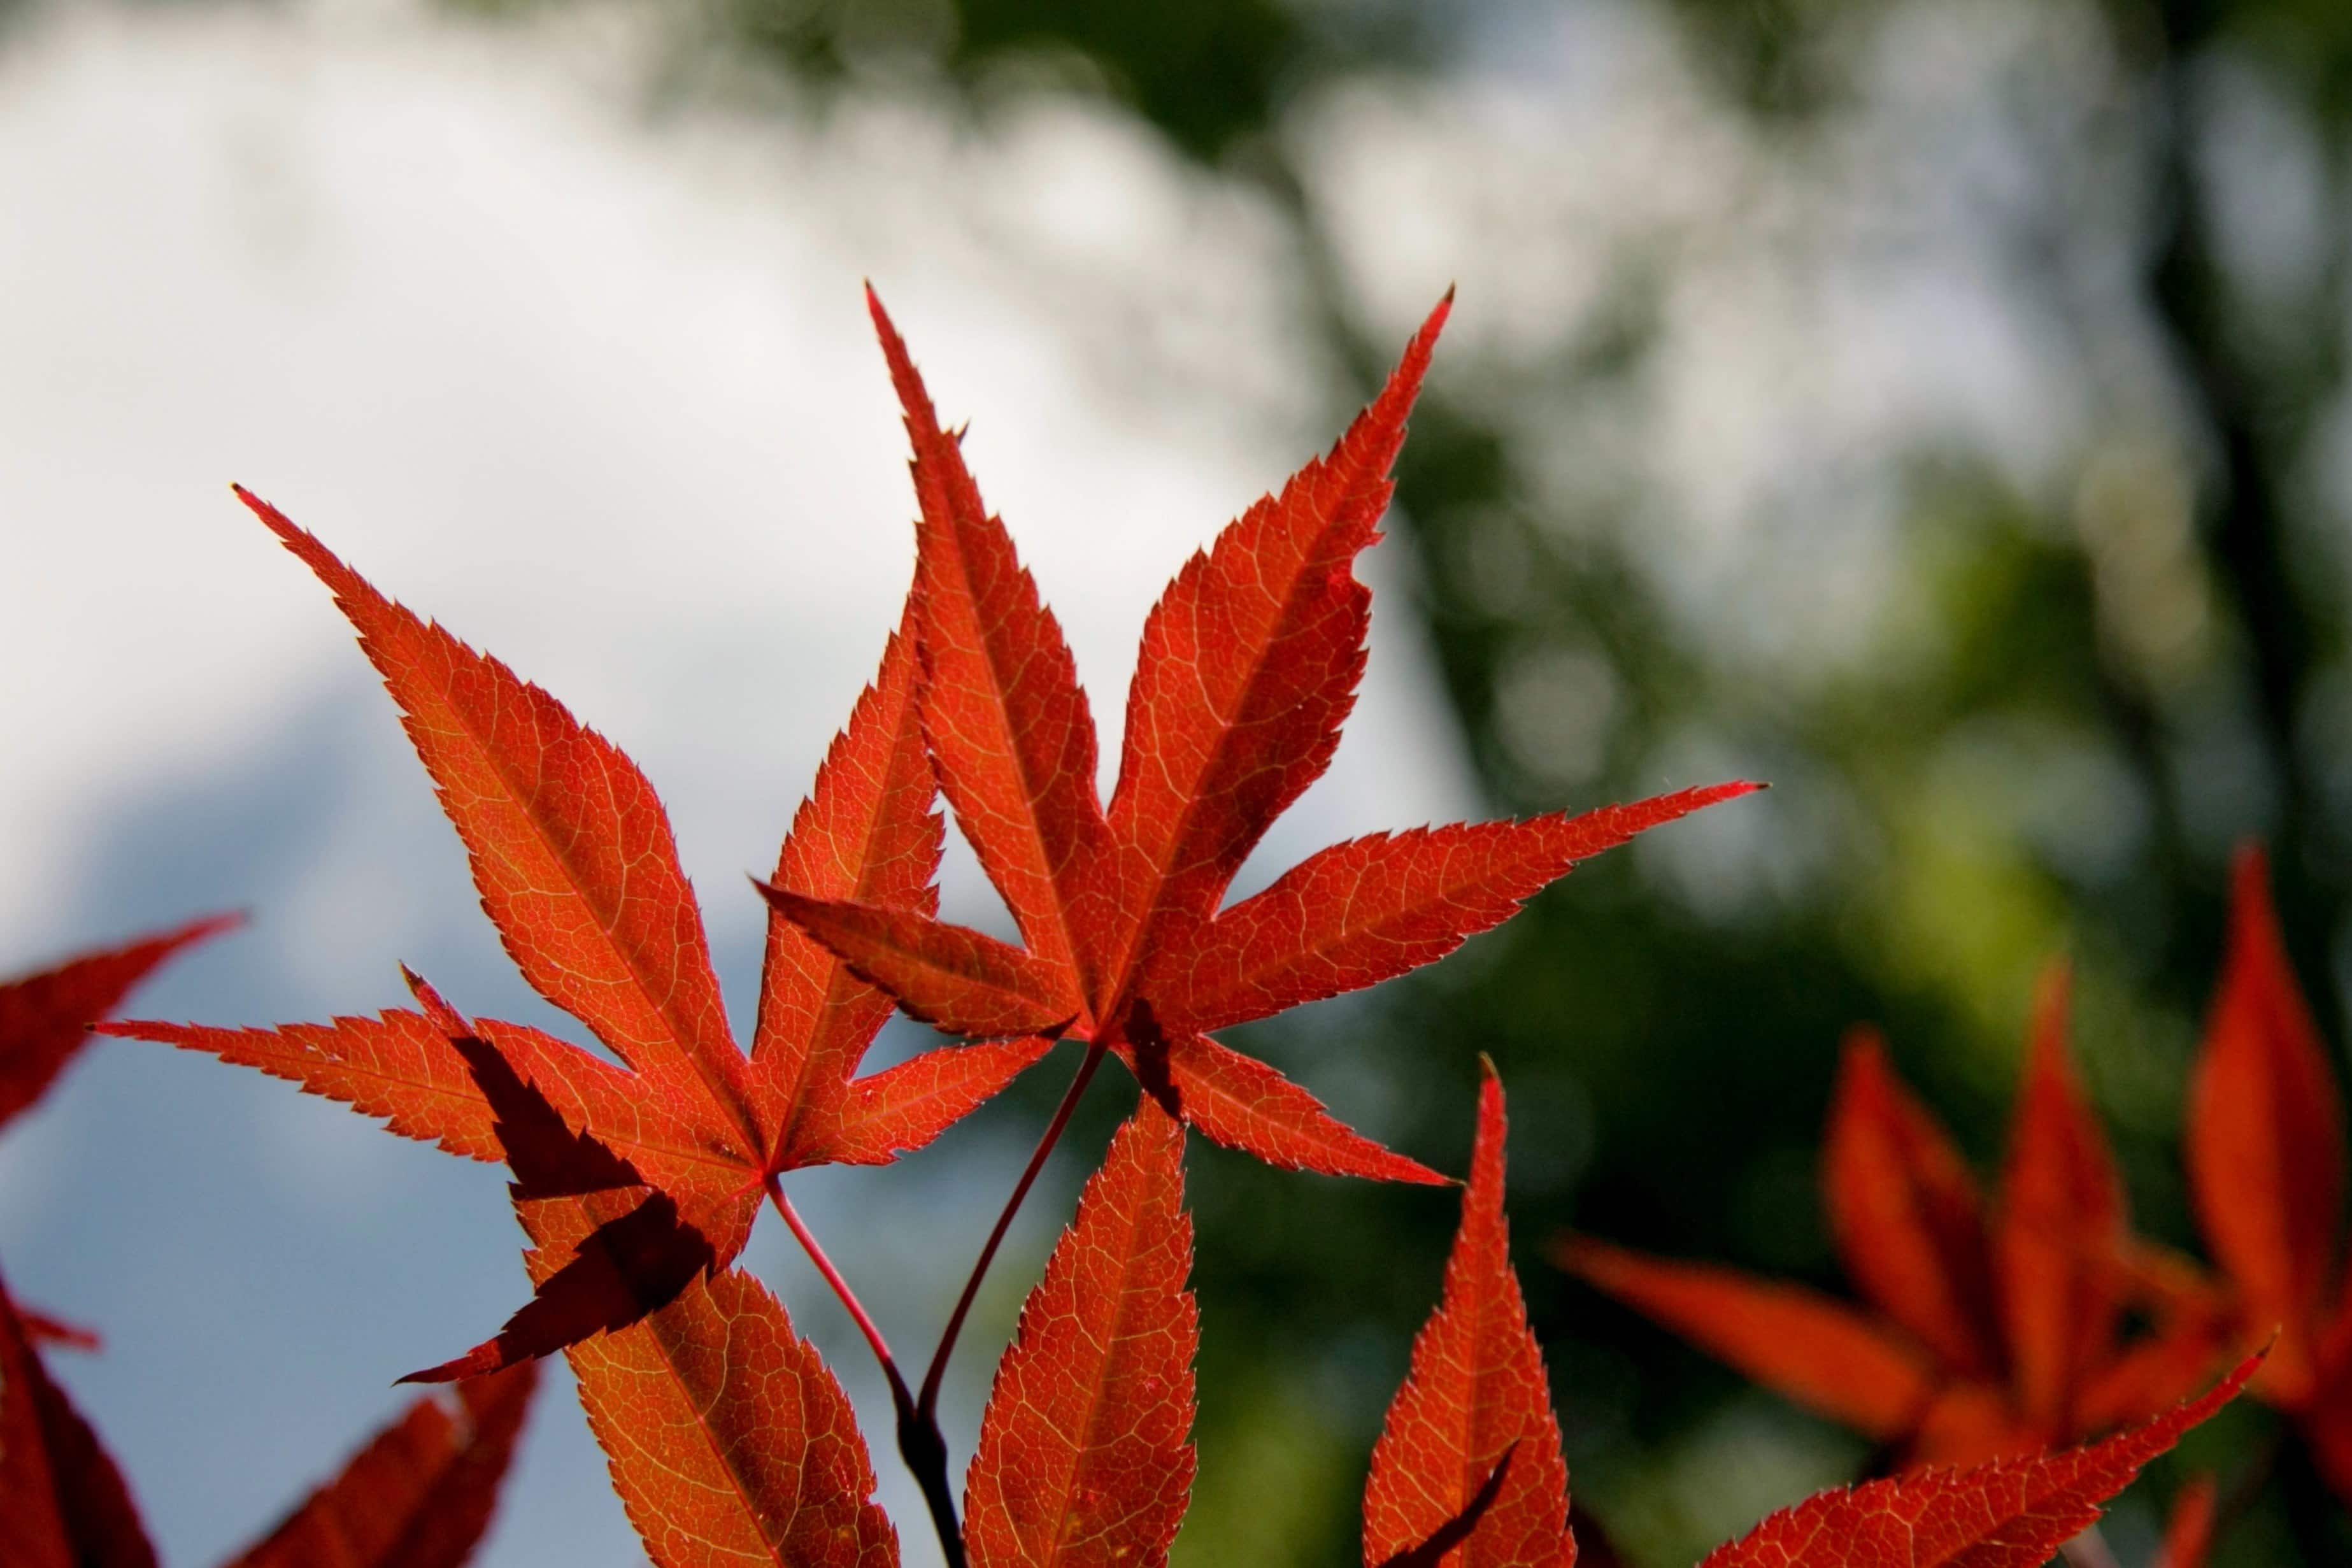 Gambar gratis: daun, alam, daun merah, ramuan, cabang, musim gugur